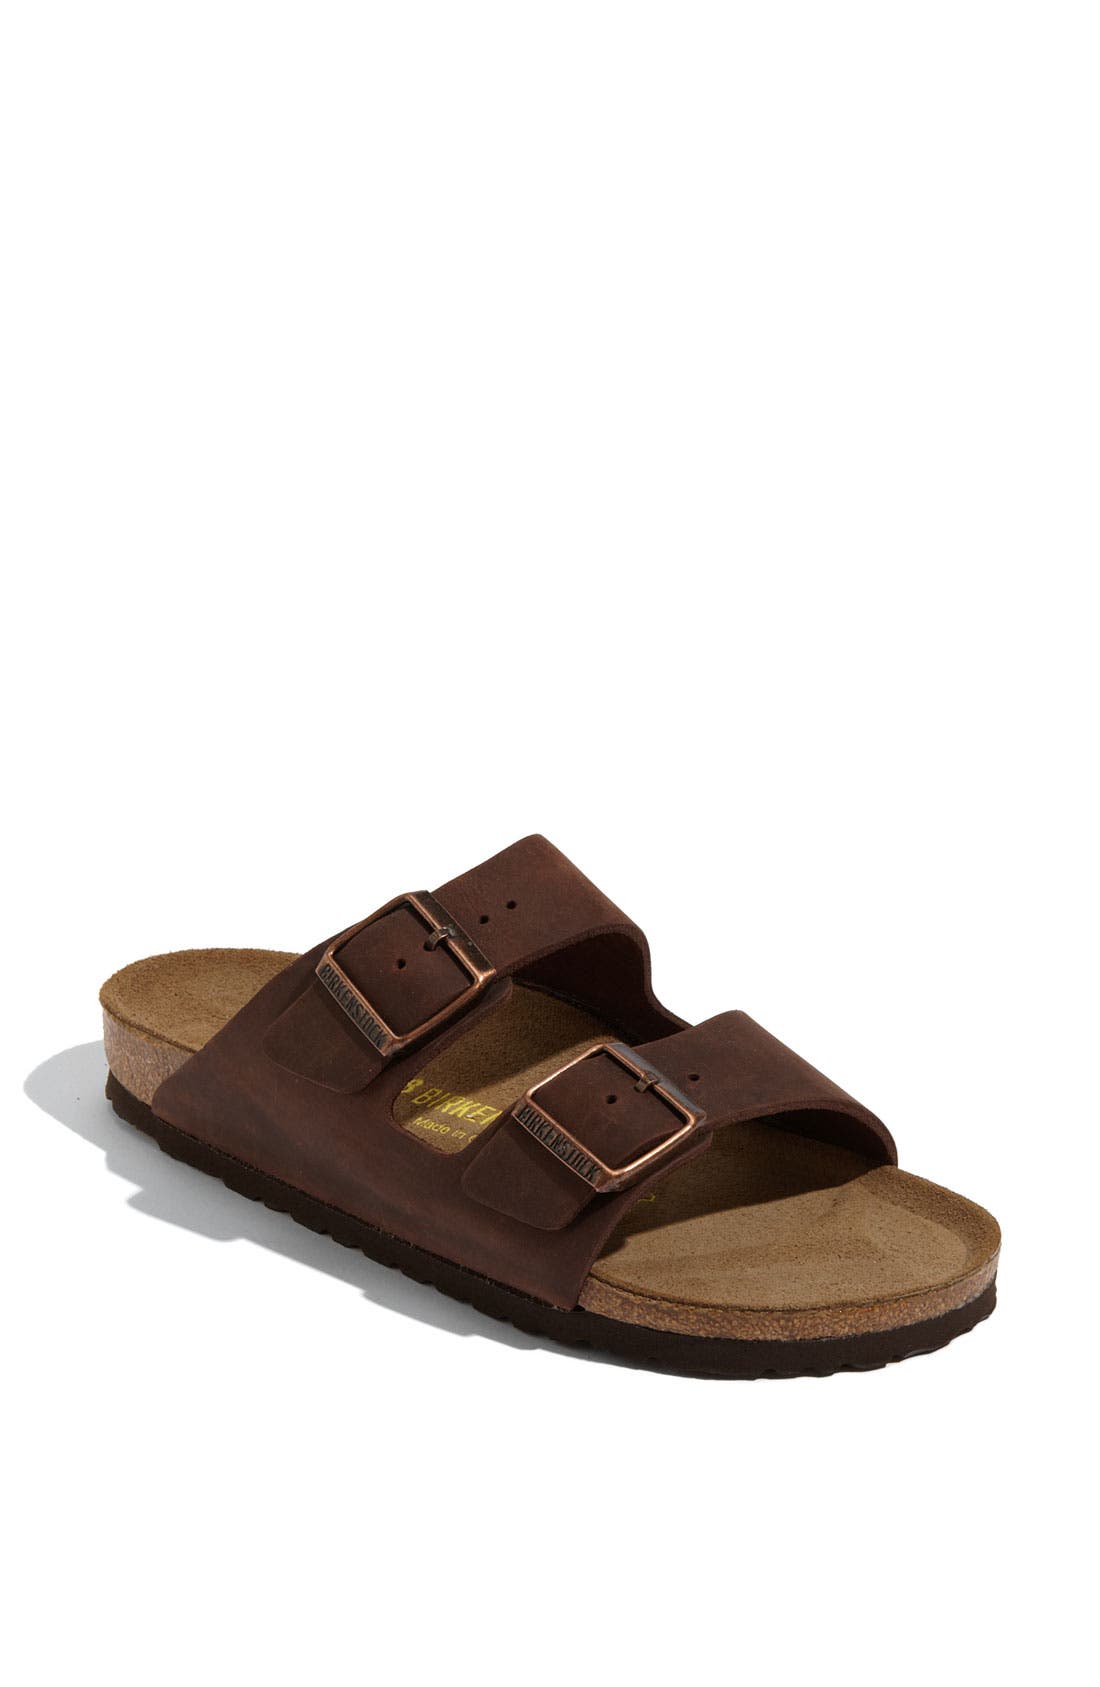 Birkenstock Arizona Soft Footbed Sandal in Habana Leather at Nordstrom, Size 8-8.5Us